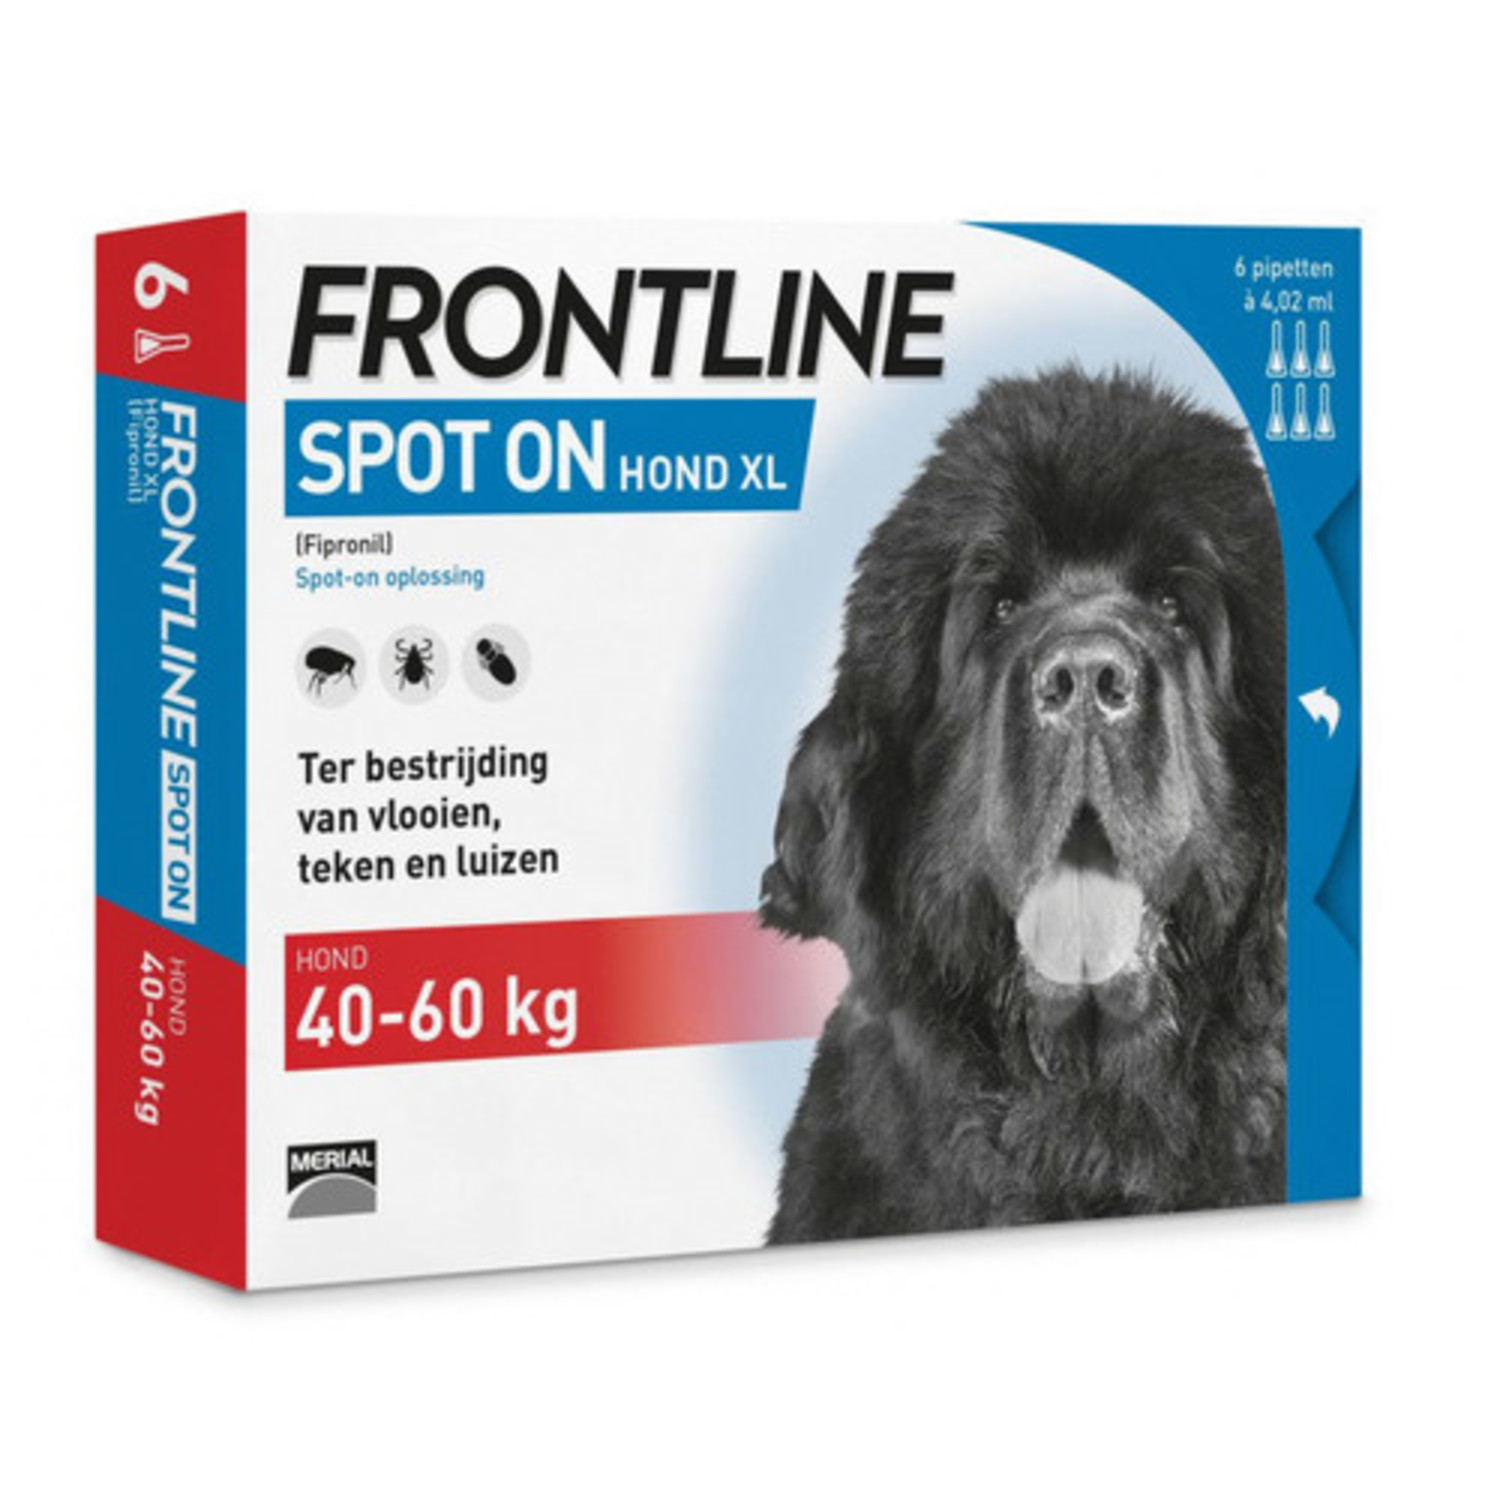 Frontline Spot On Hond XL (40 tot 60 kg) 6 pipetten -